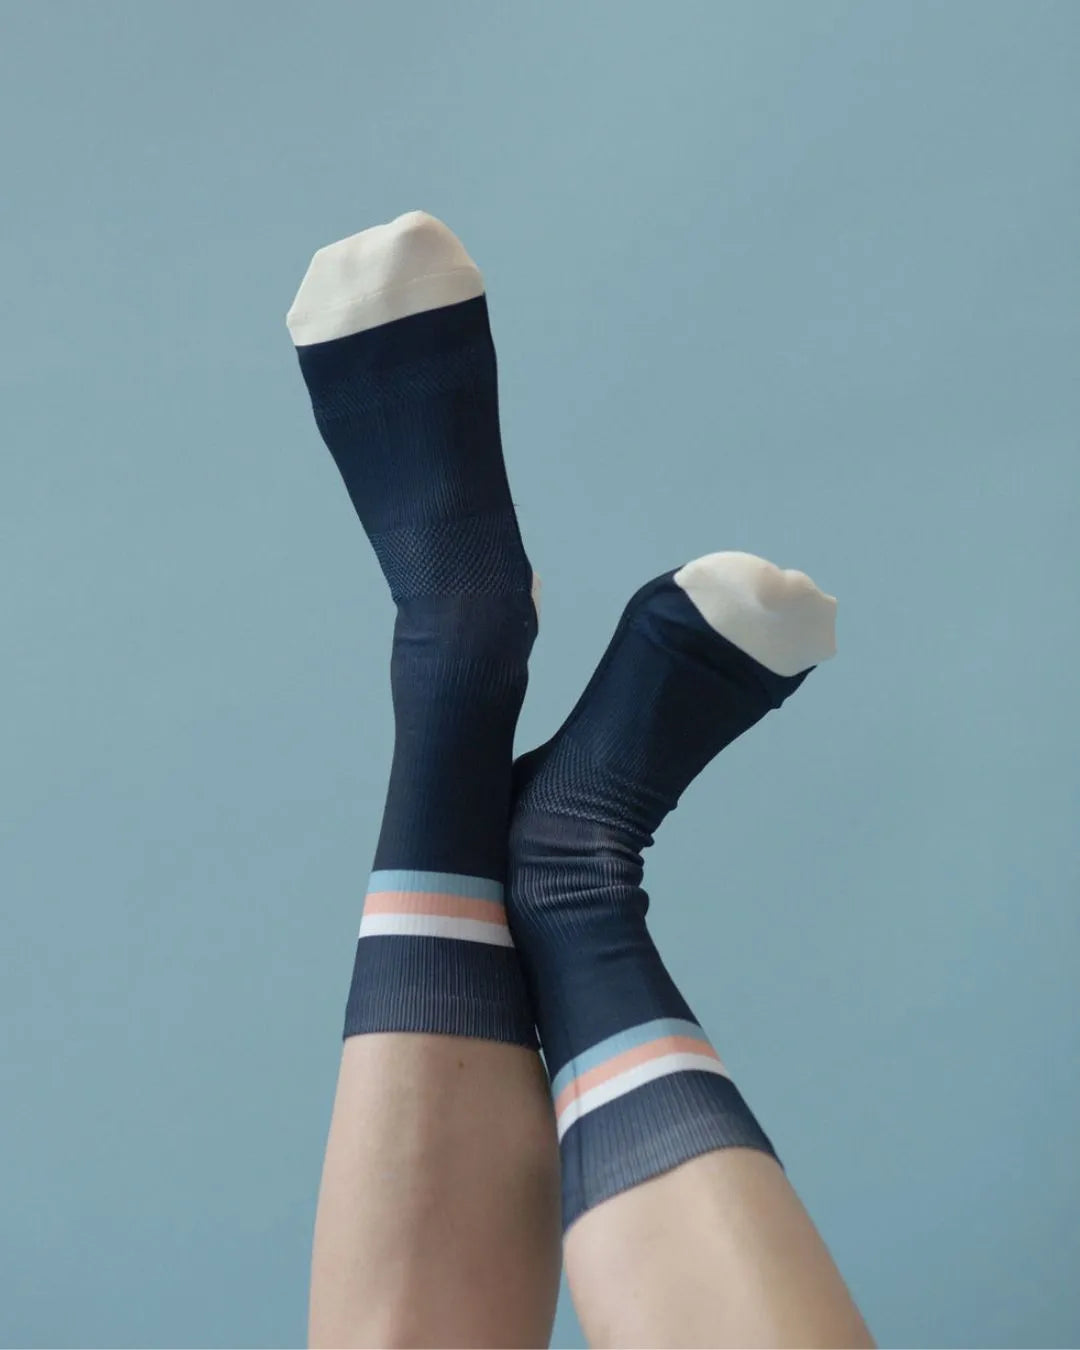 Performance Crew Socks - Victory Stripe, Socks, Samsara Cycle, Socks